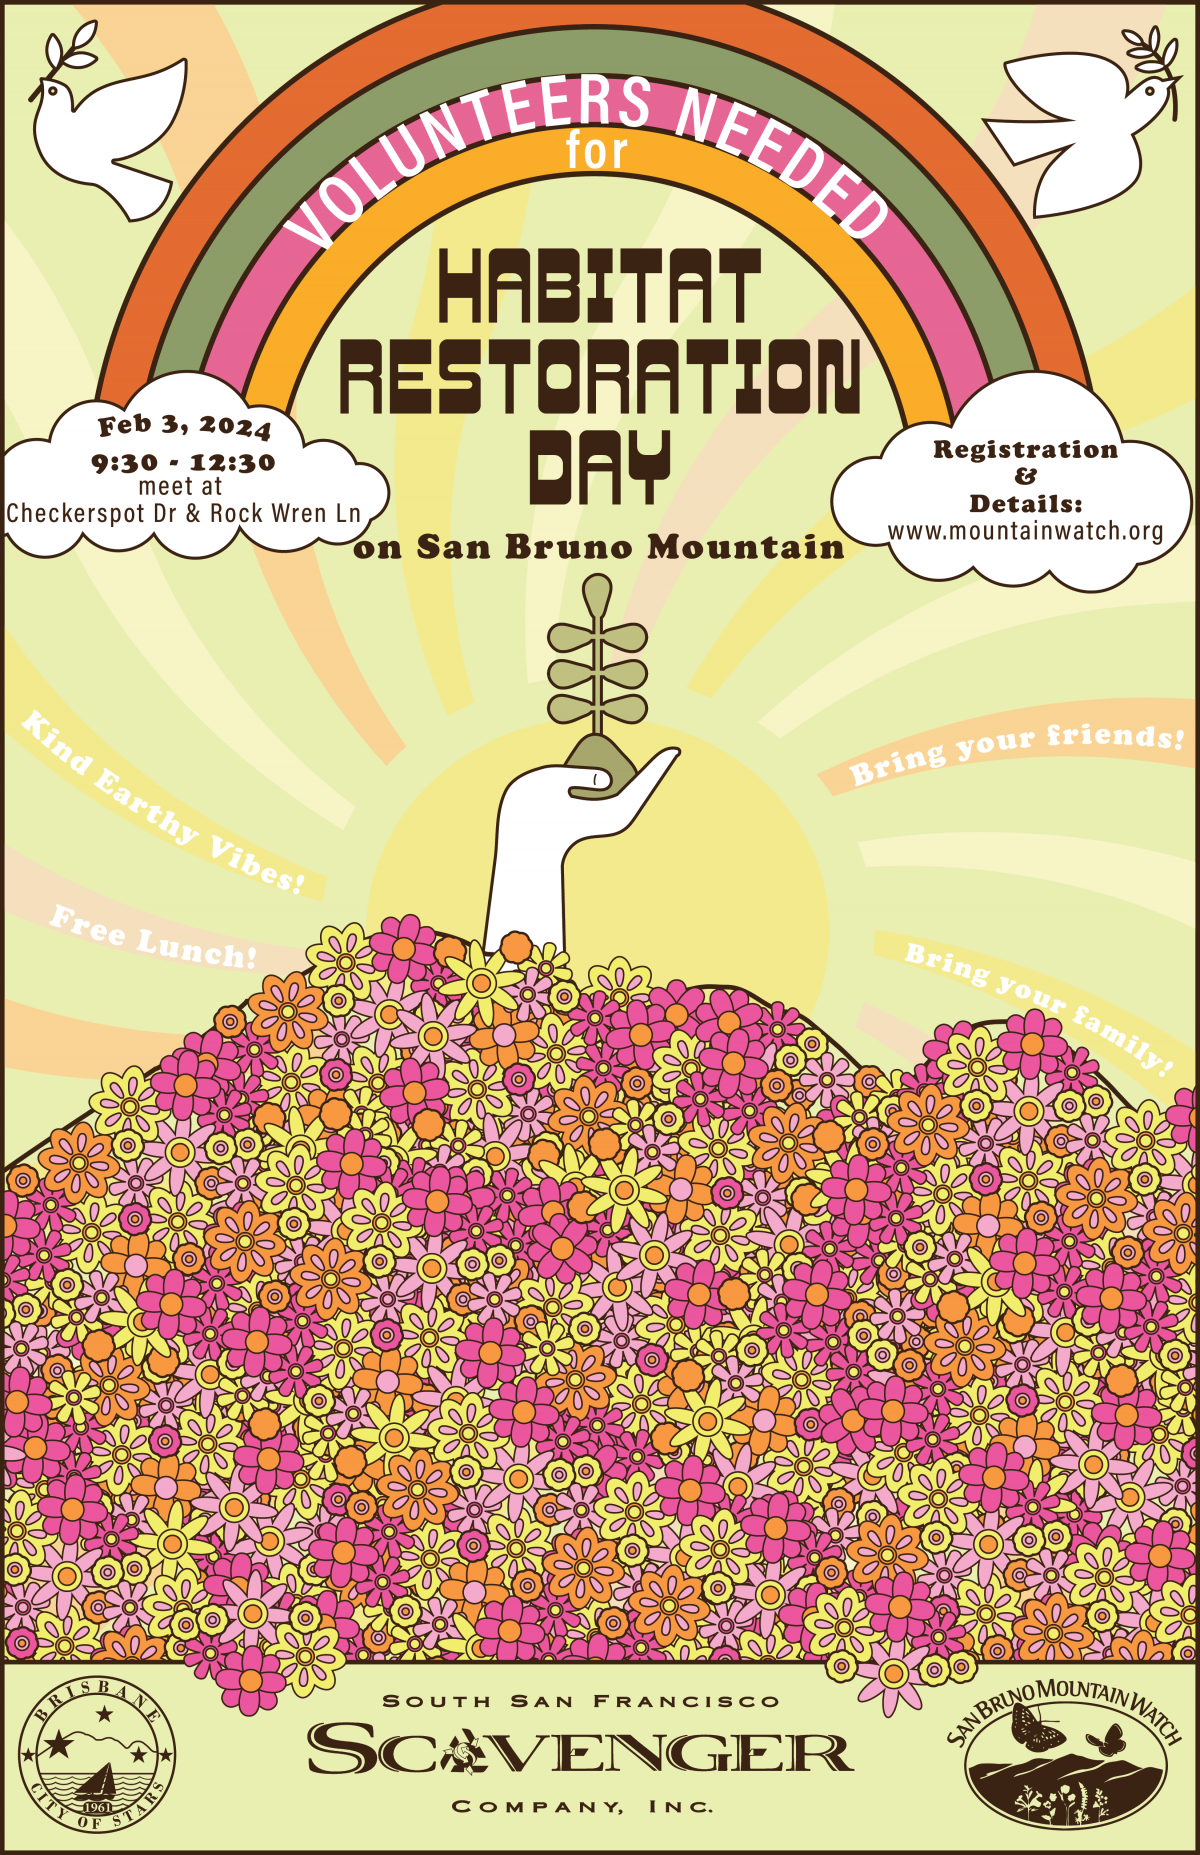 Habitat Restoration Day flyer